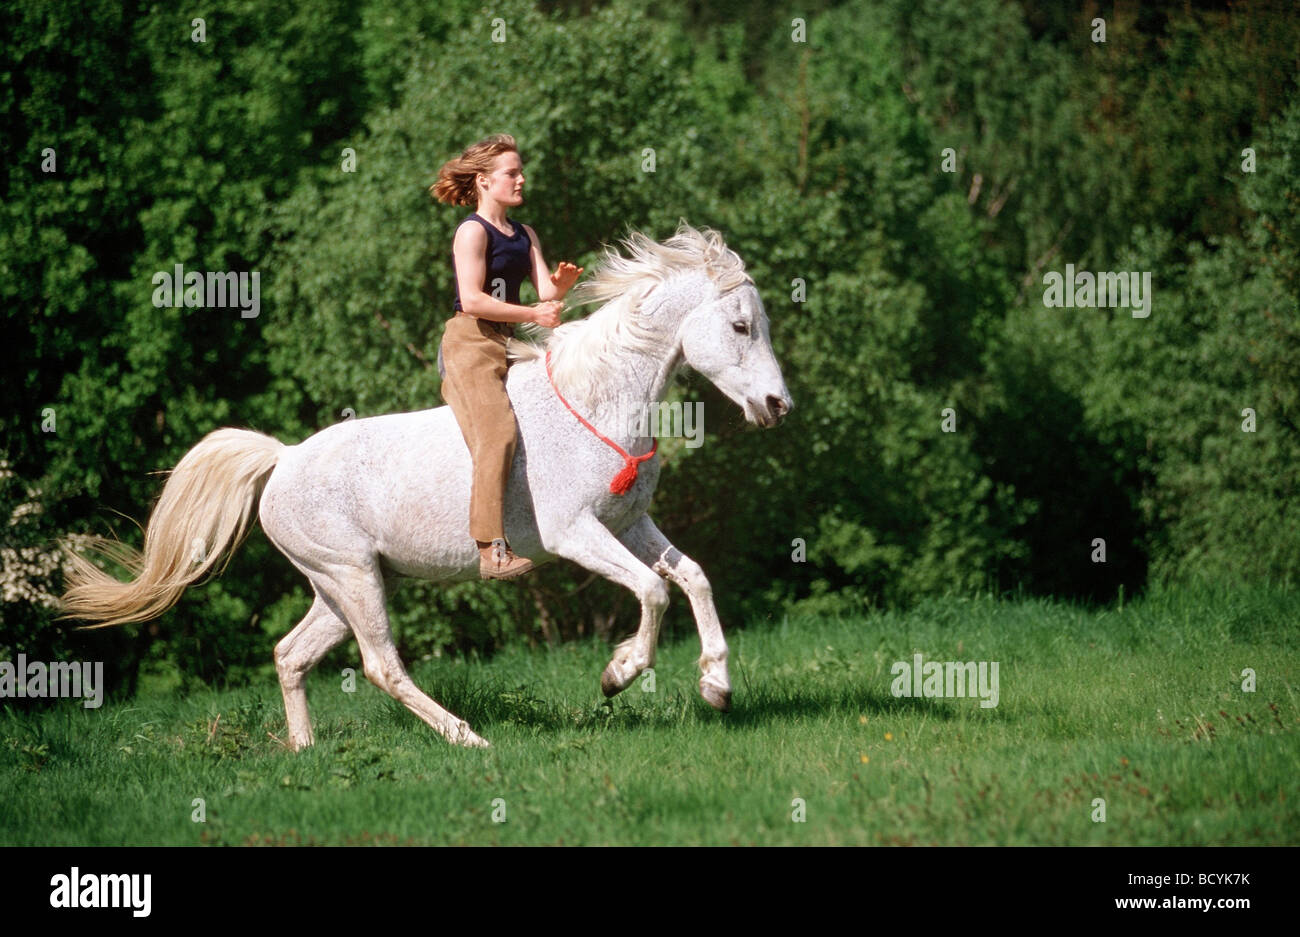 woman riding on horse without saddle Stock Photo